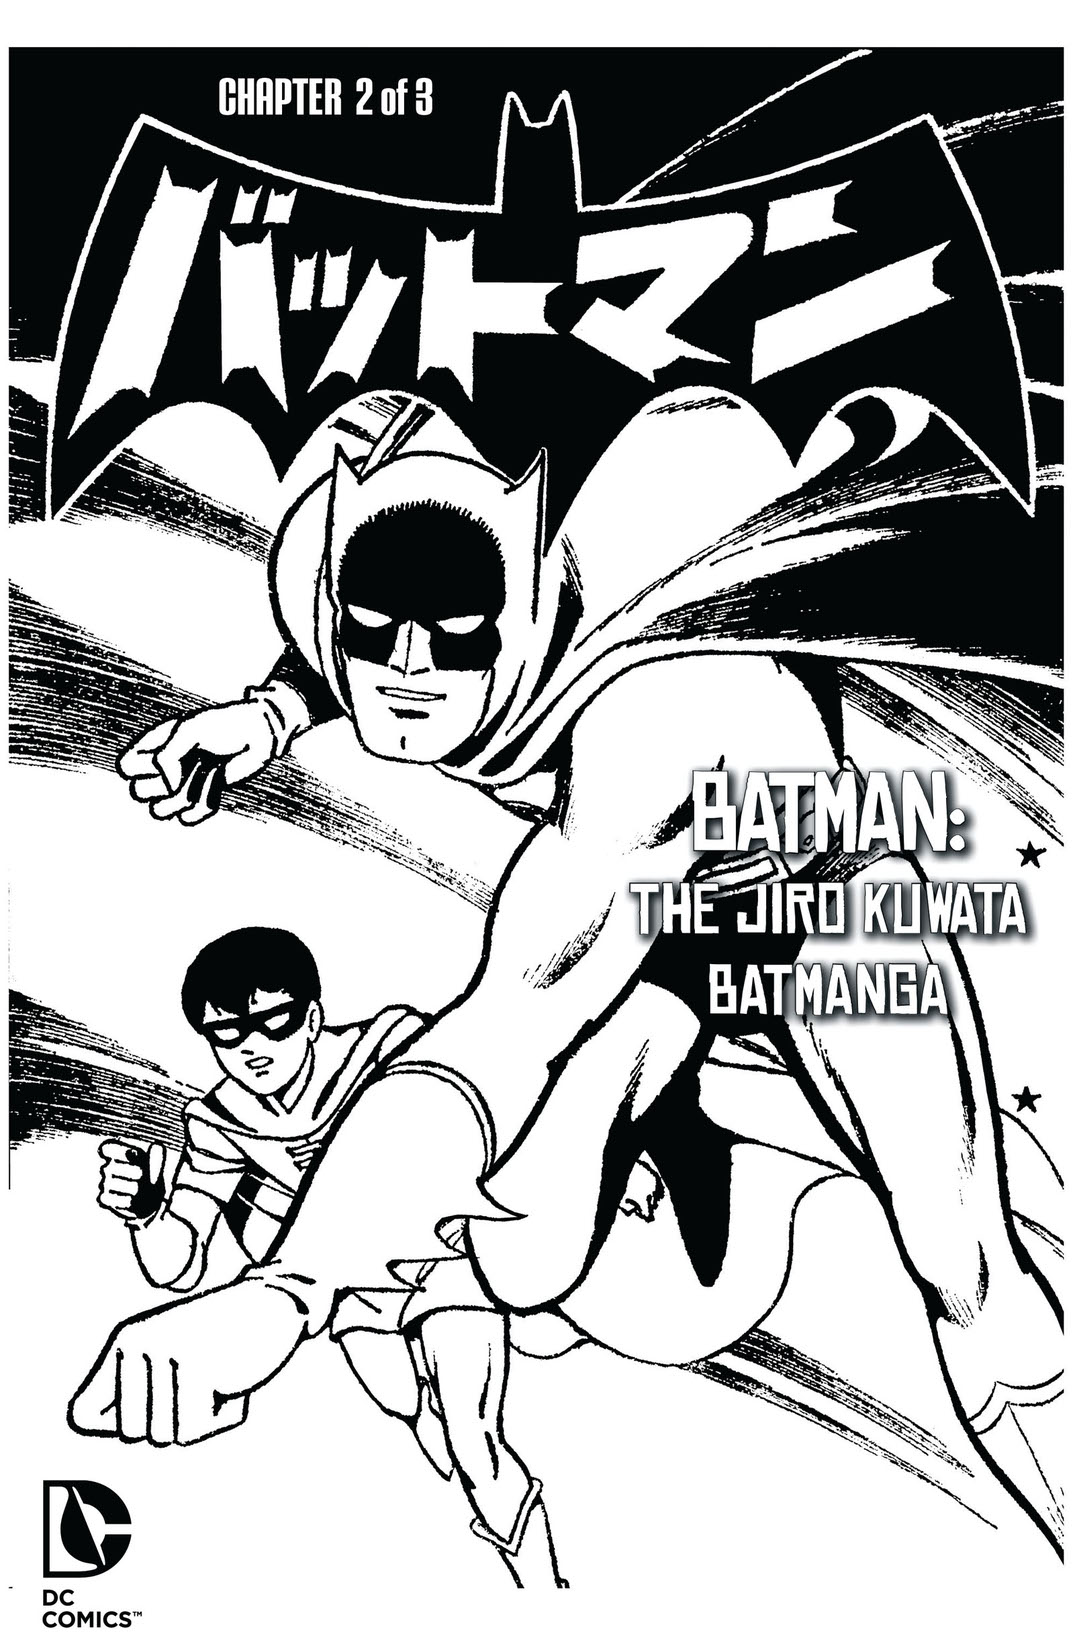 Batman: The Jiro Kuwata Batmanga #29 preview images